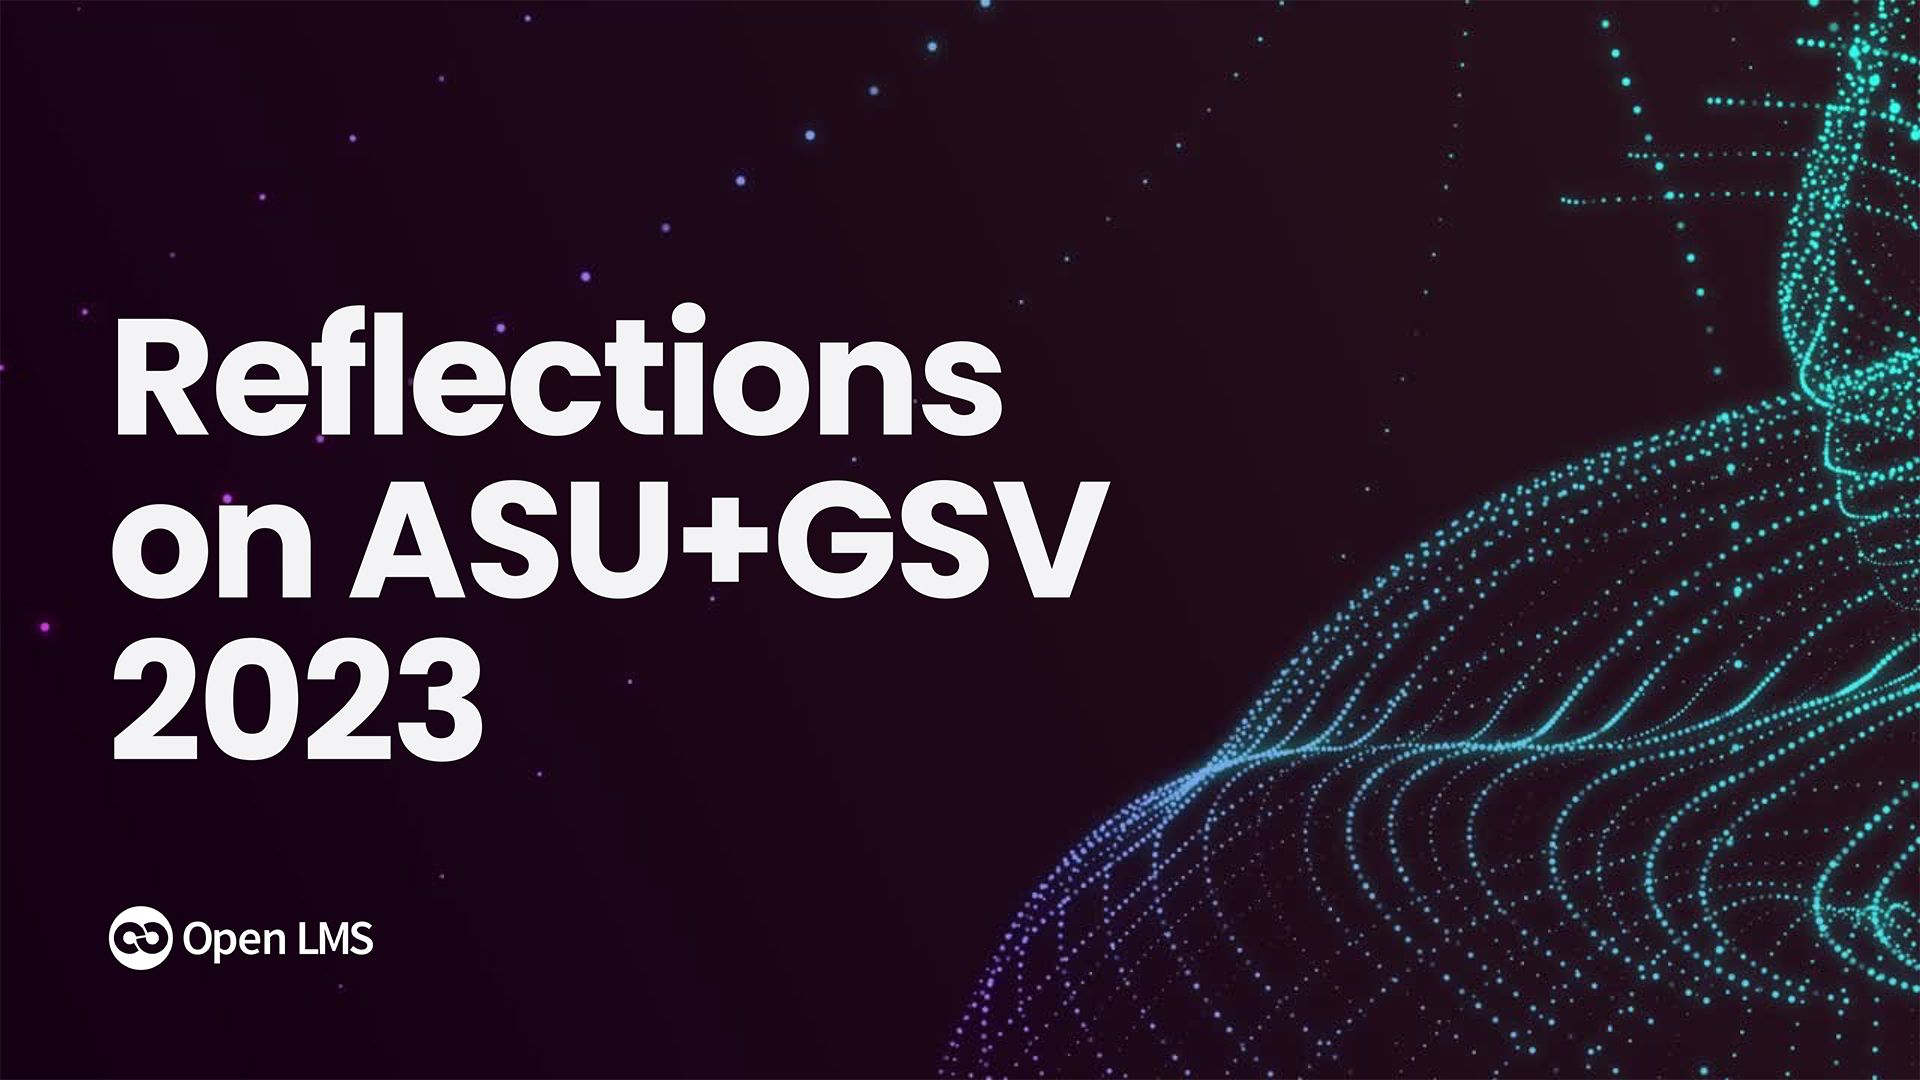 Reflections on ASU+GSV 2023